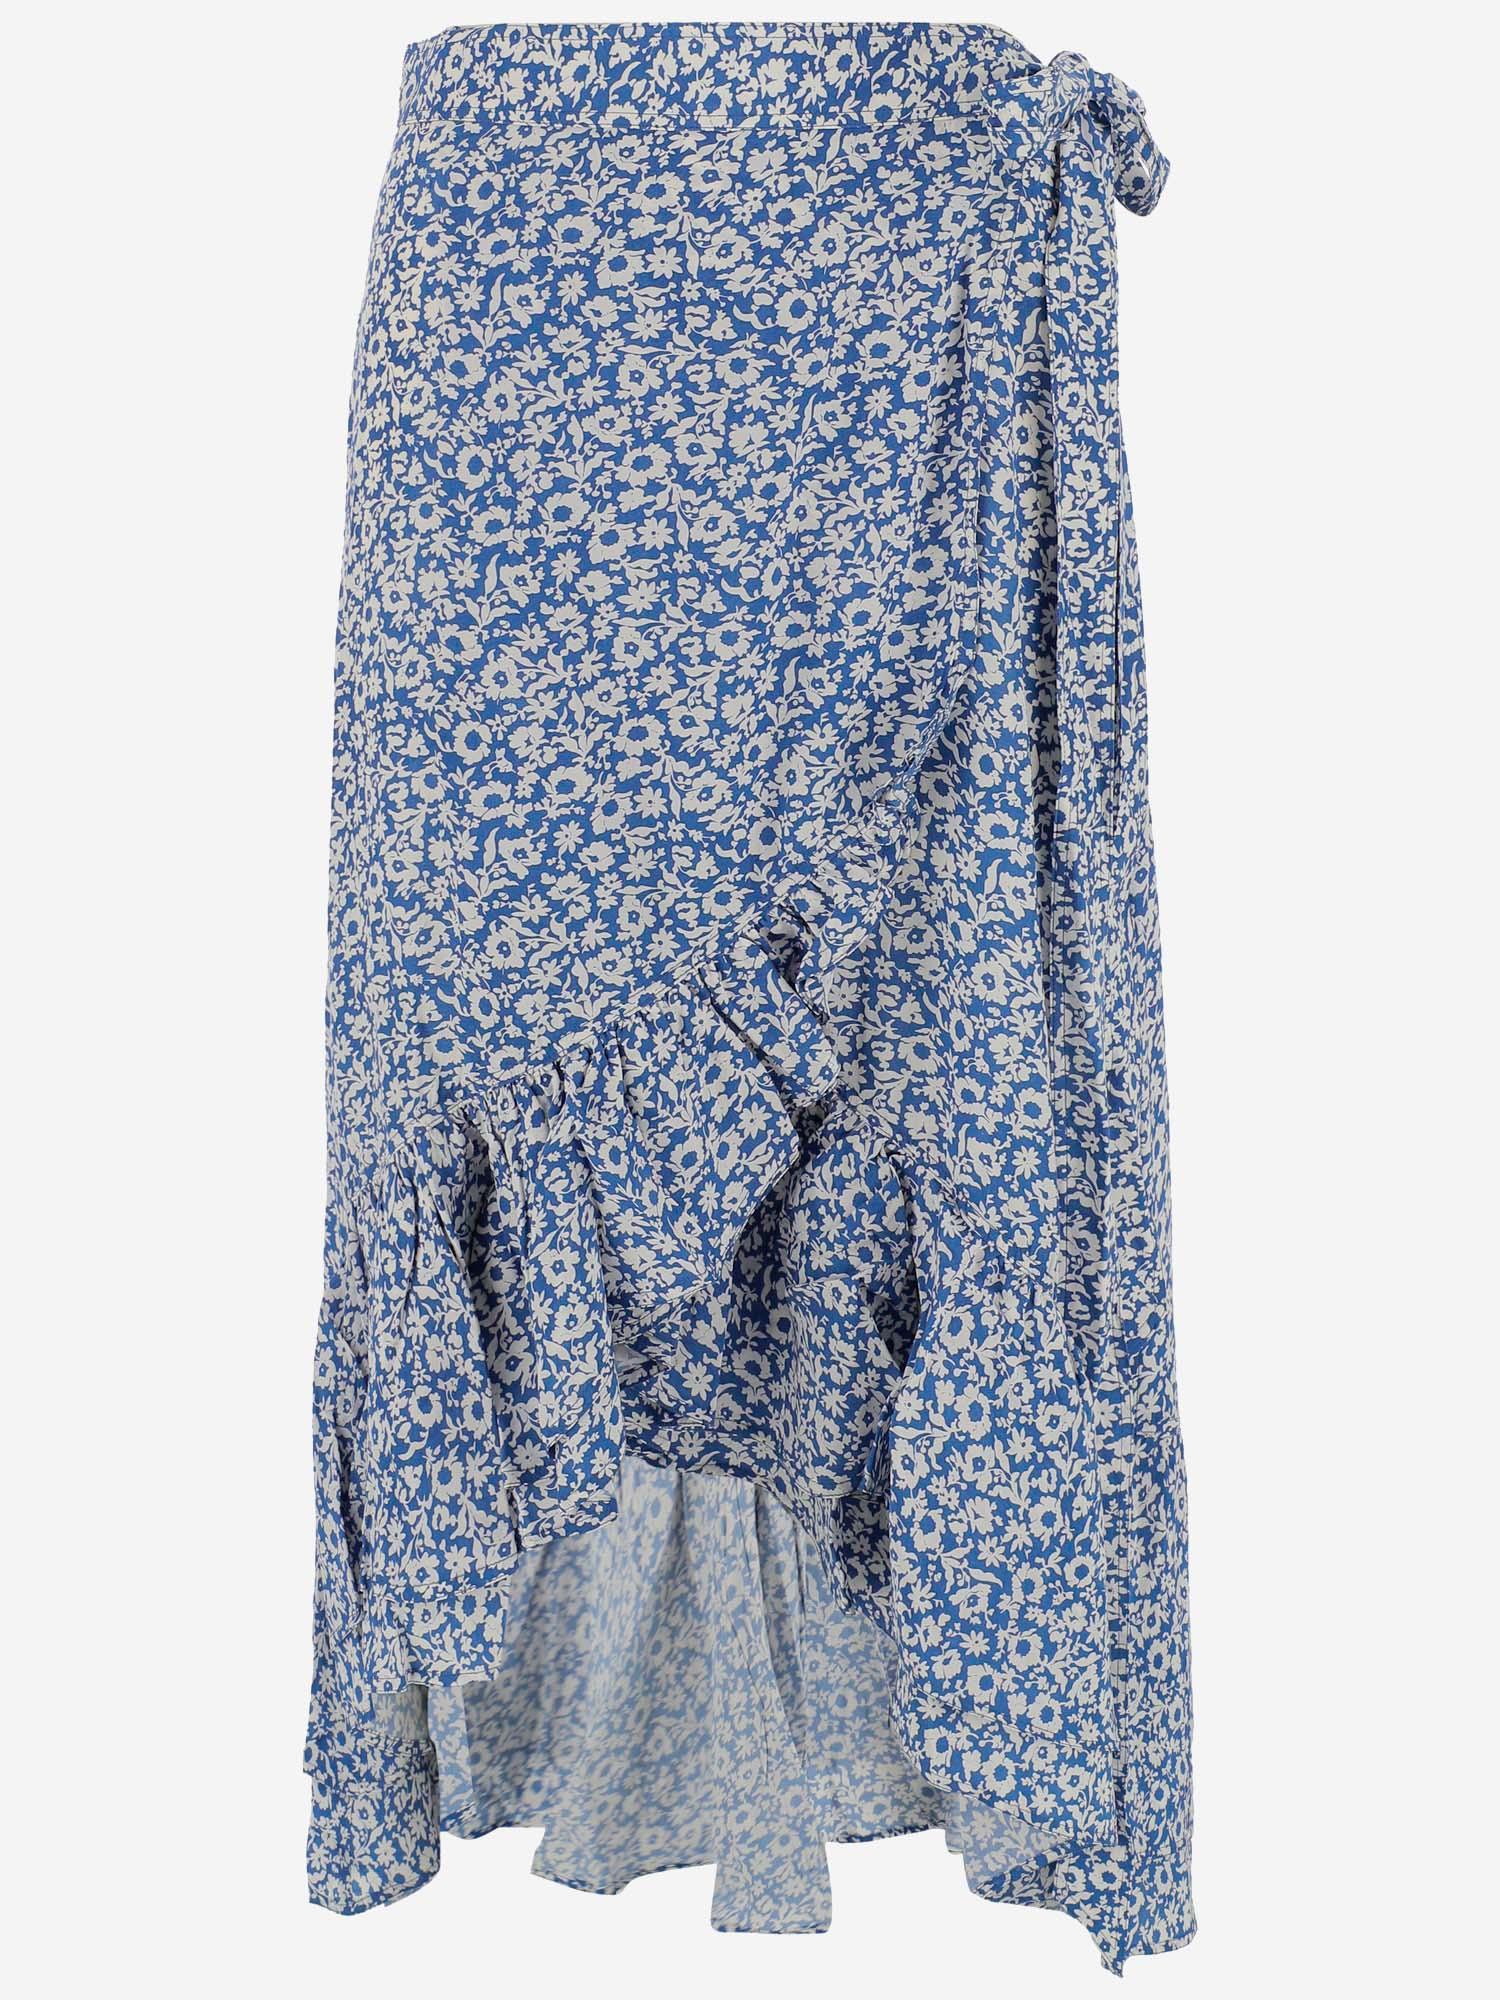 Ralph Lauren Floral-patterned Viscose Skirt in Blue | Lyst